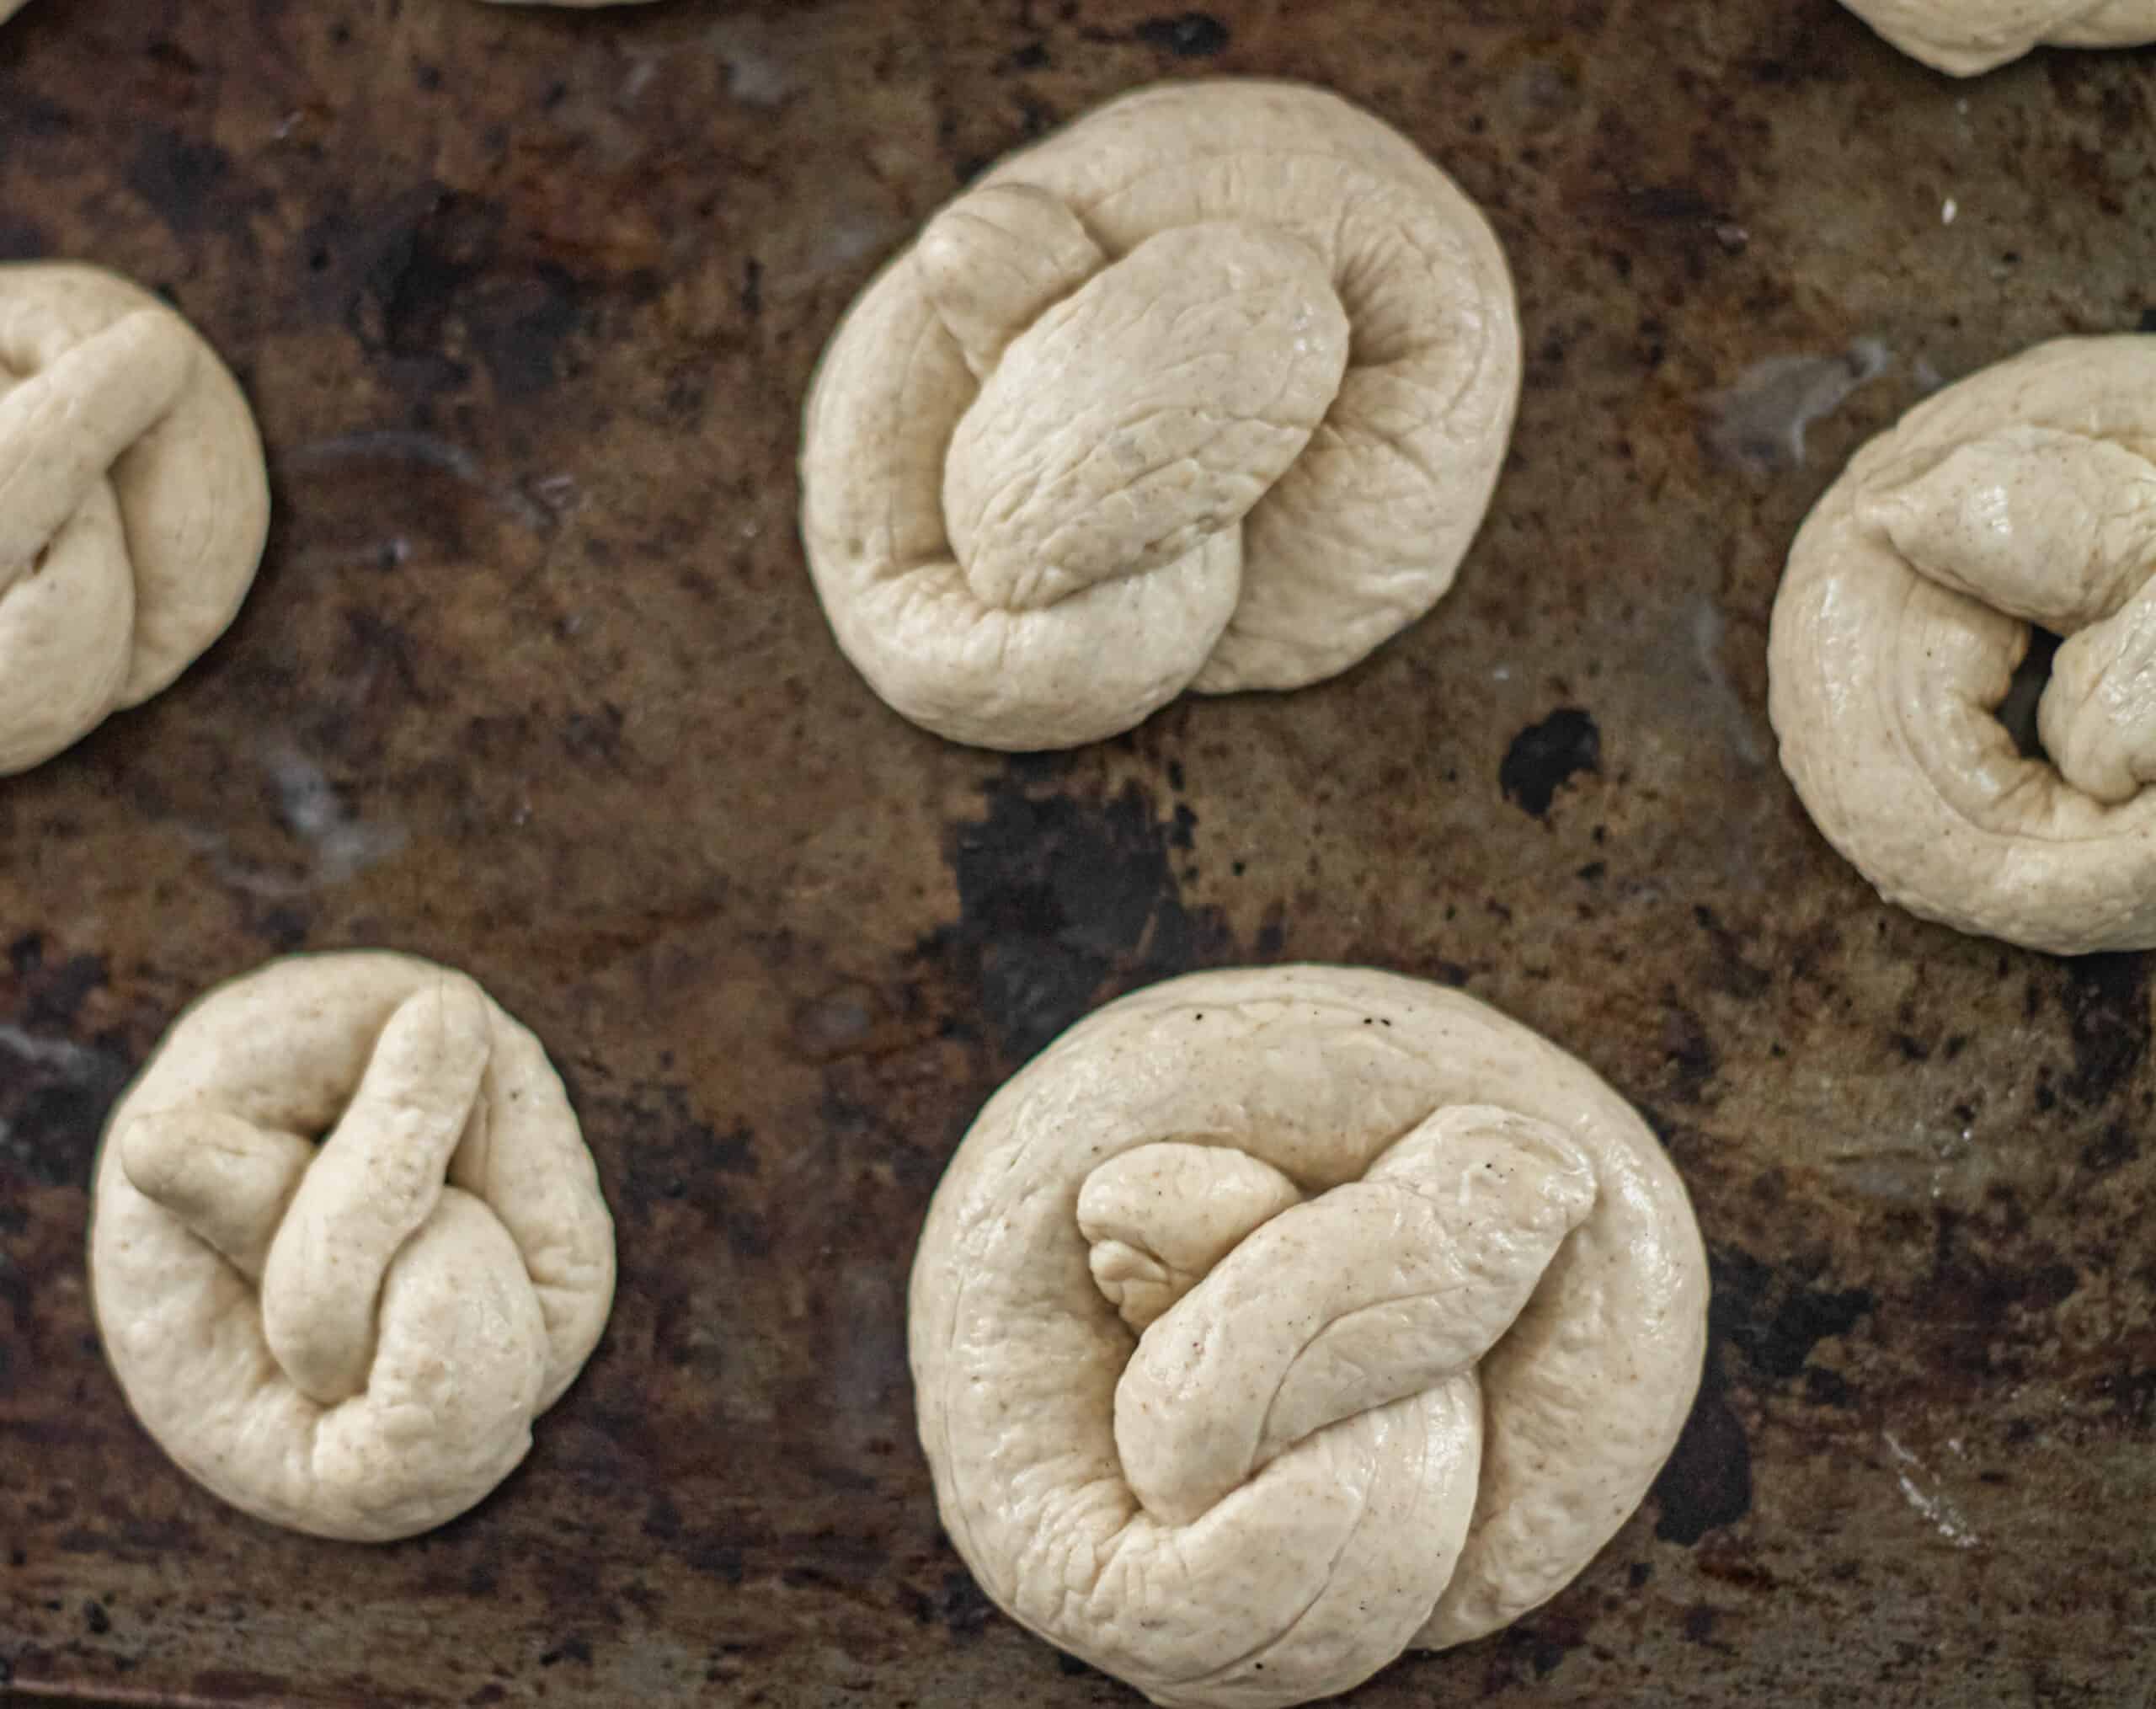 Pretzel dough formed into the pretzel shape